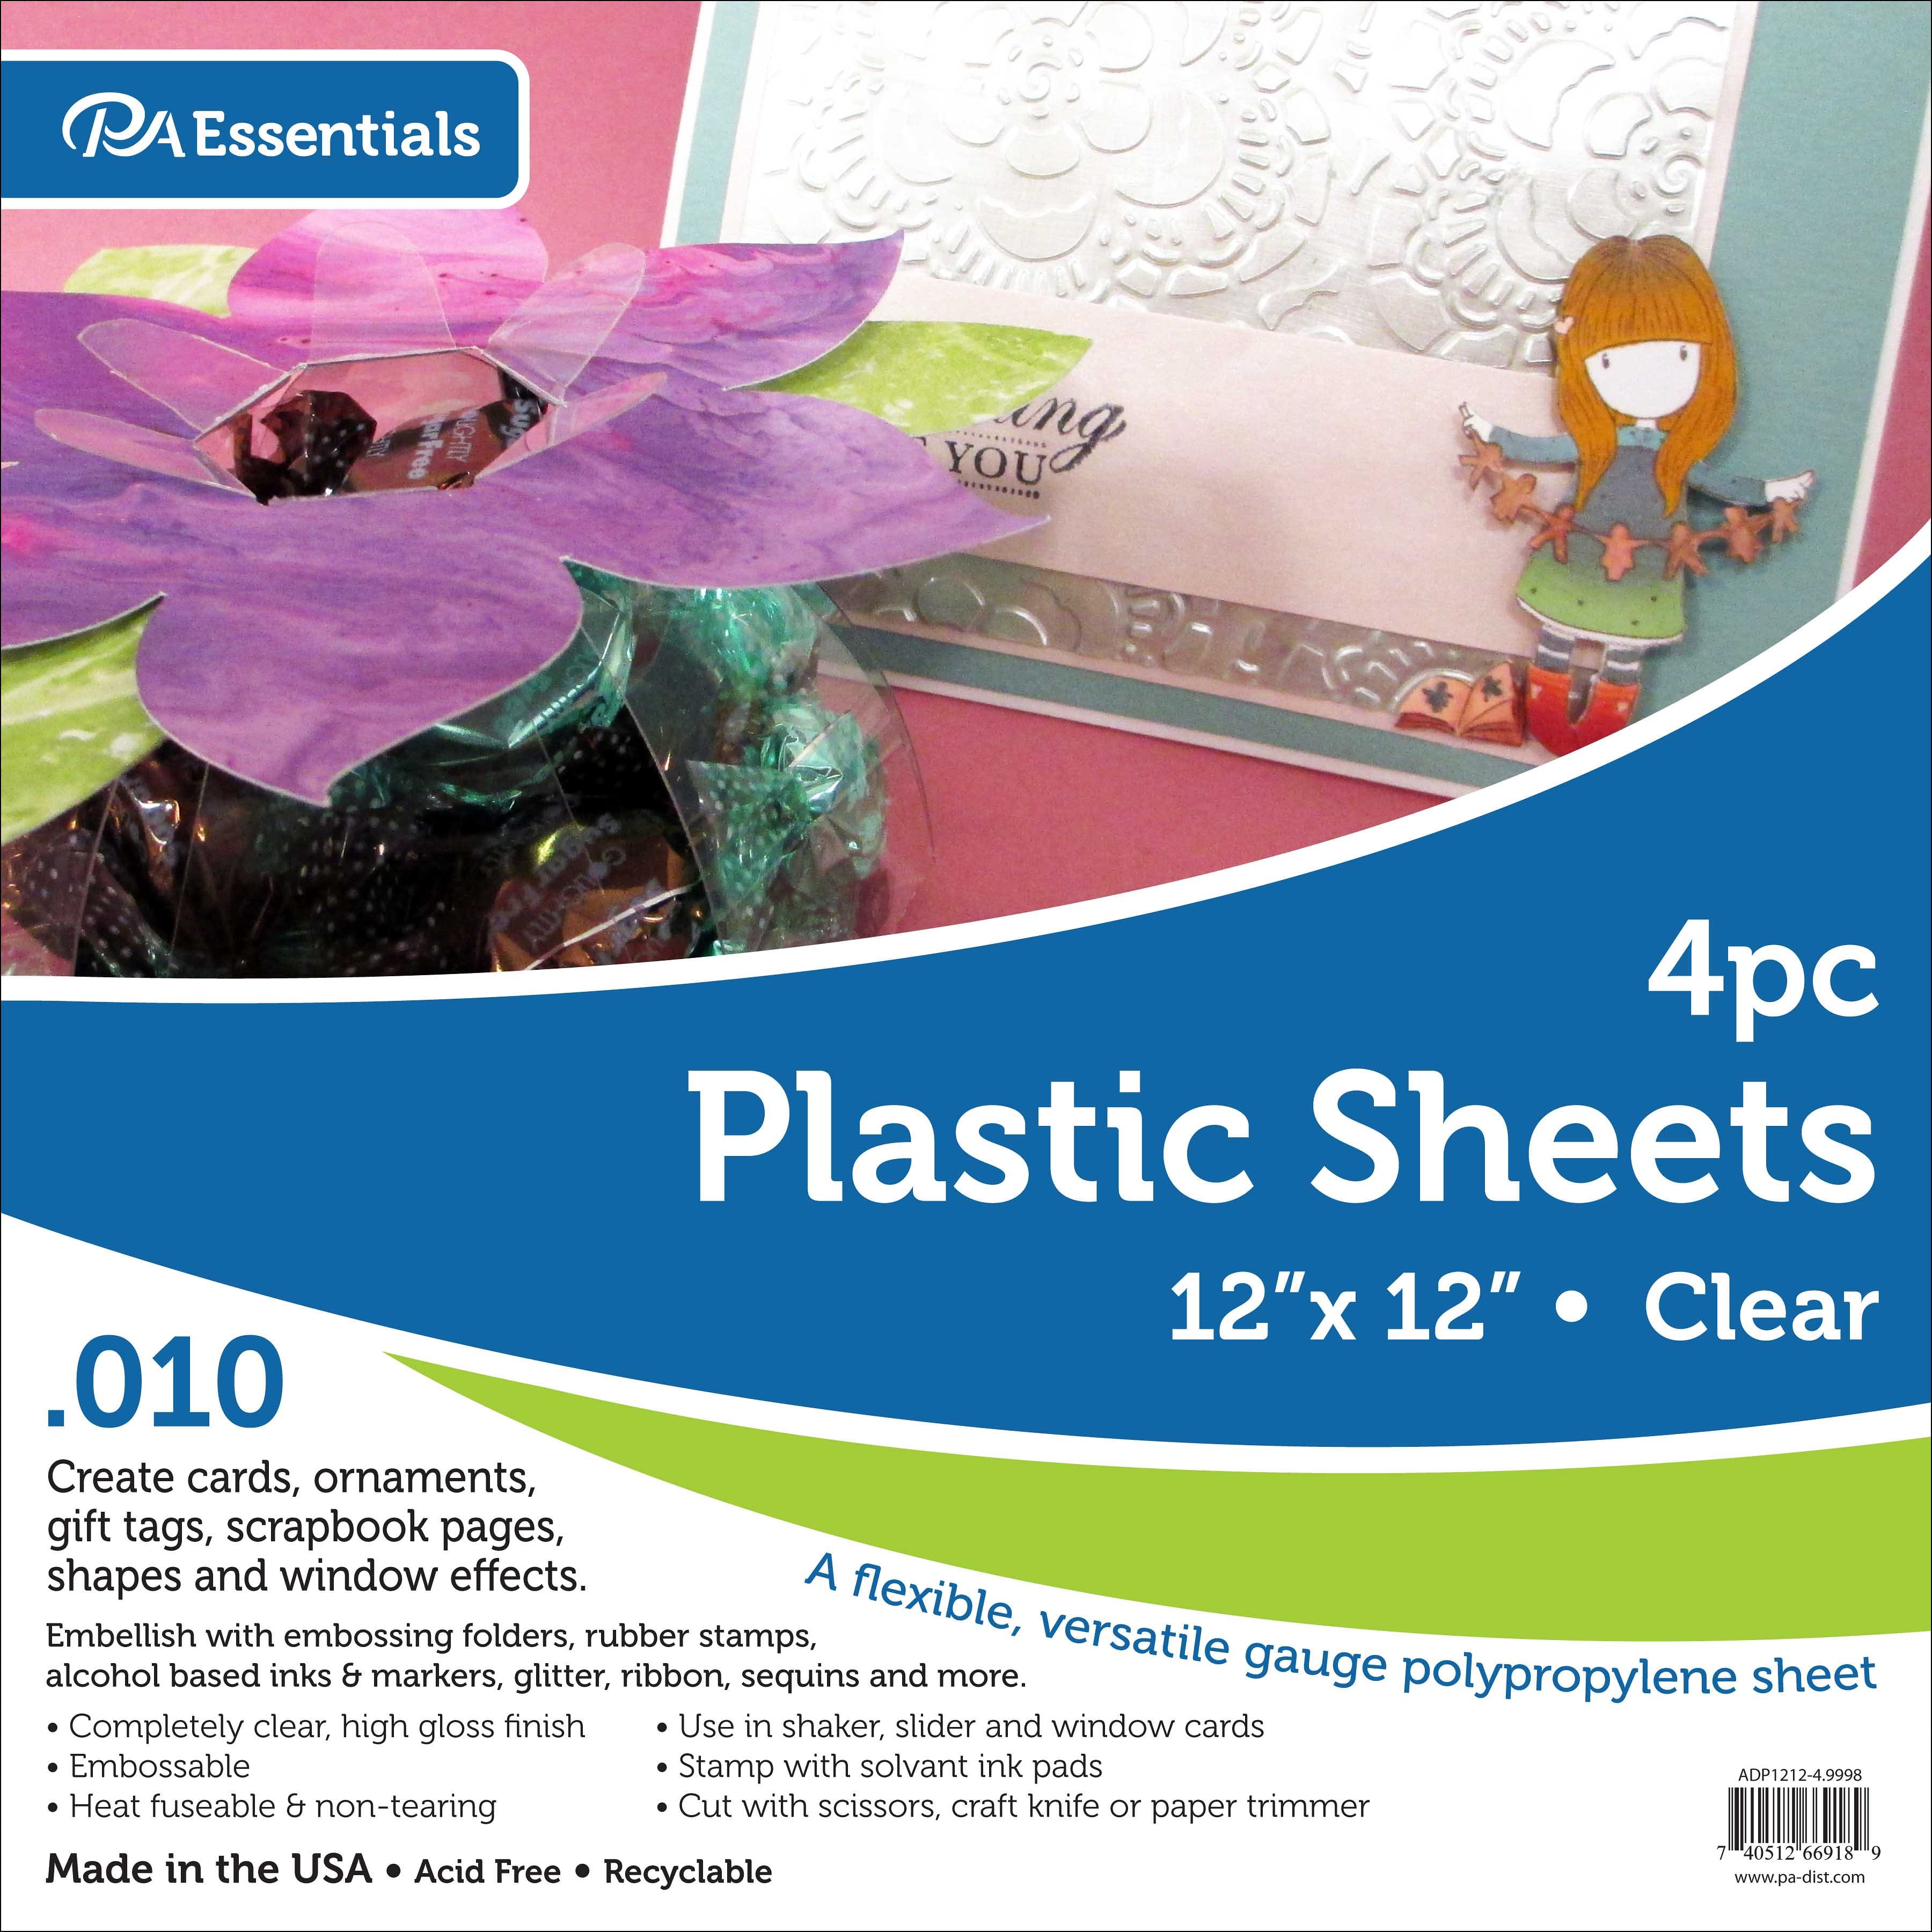 PA Essentials .010 12 x 12 Clear Plastic Sheets